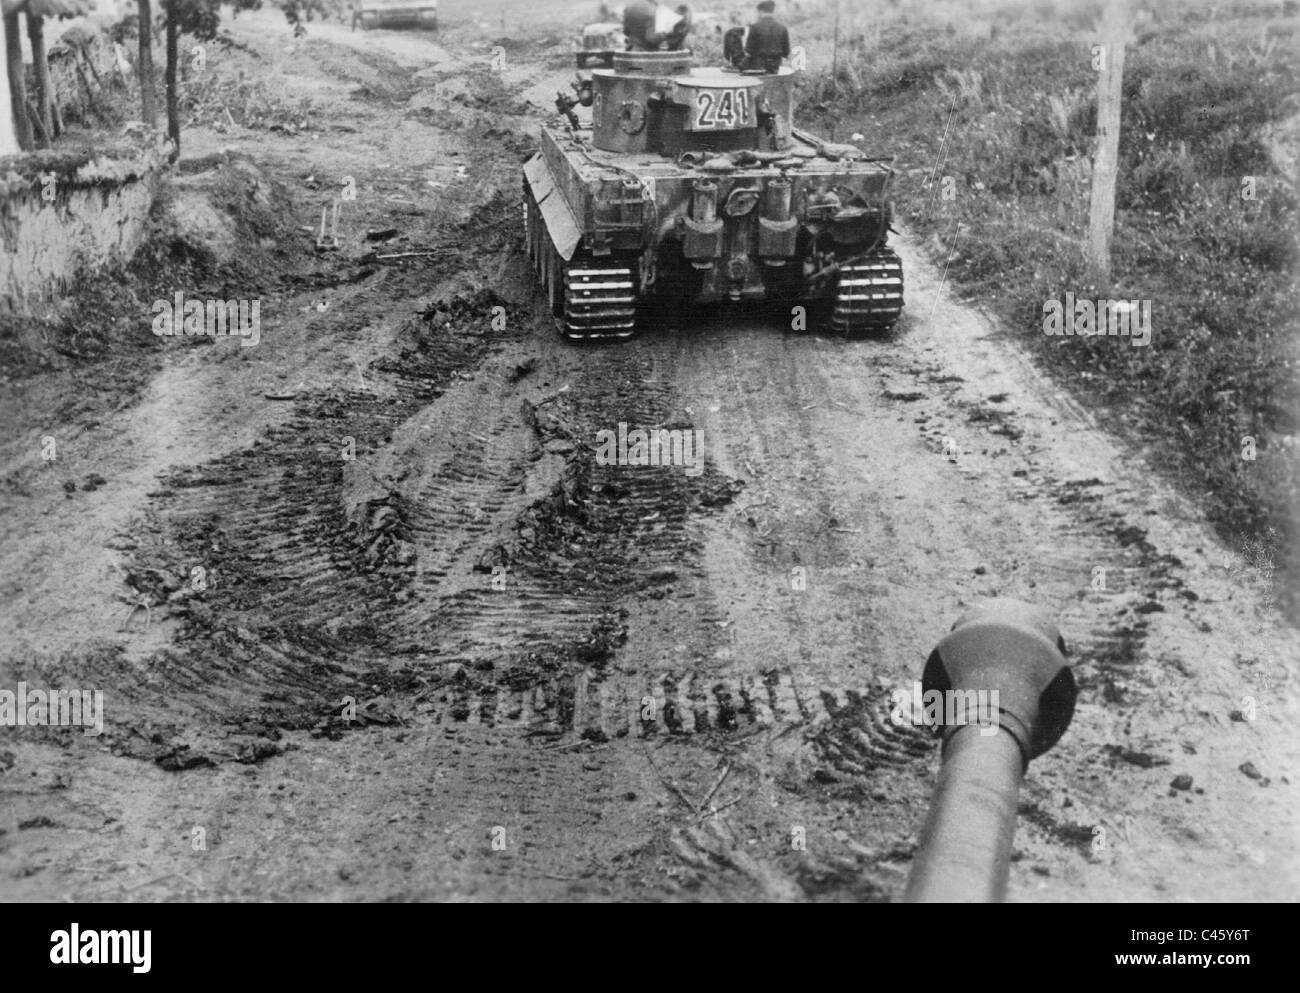 Battle Of Kursk Tiger Tank